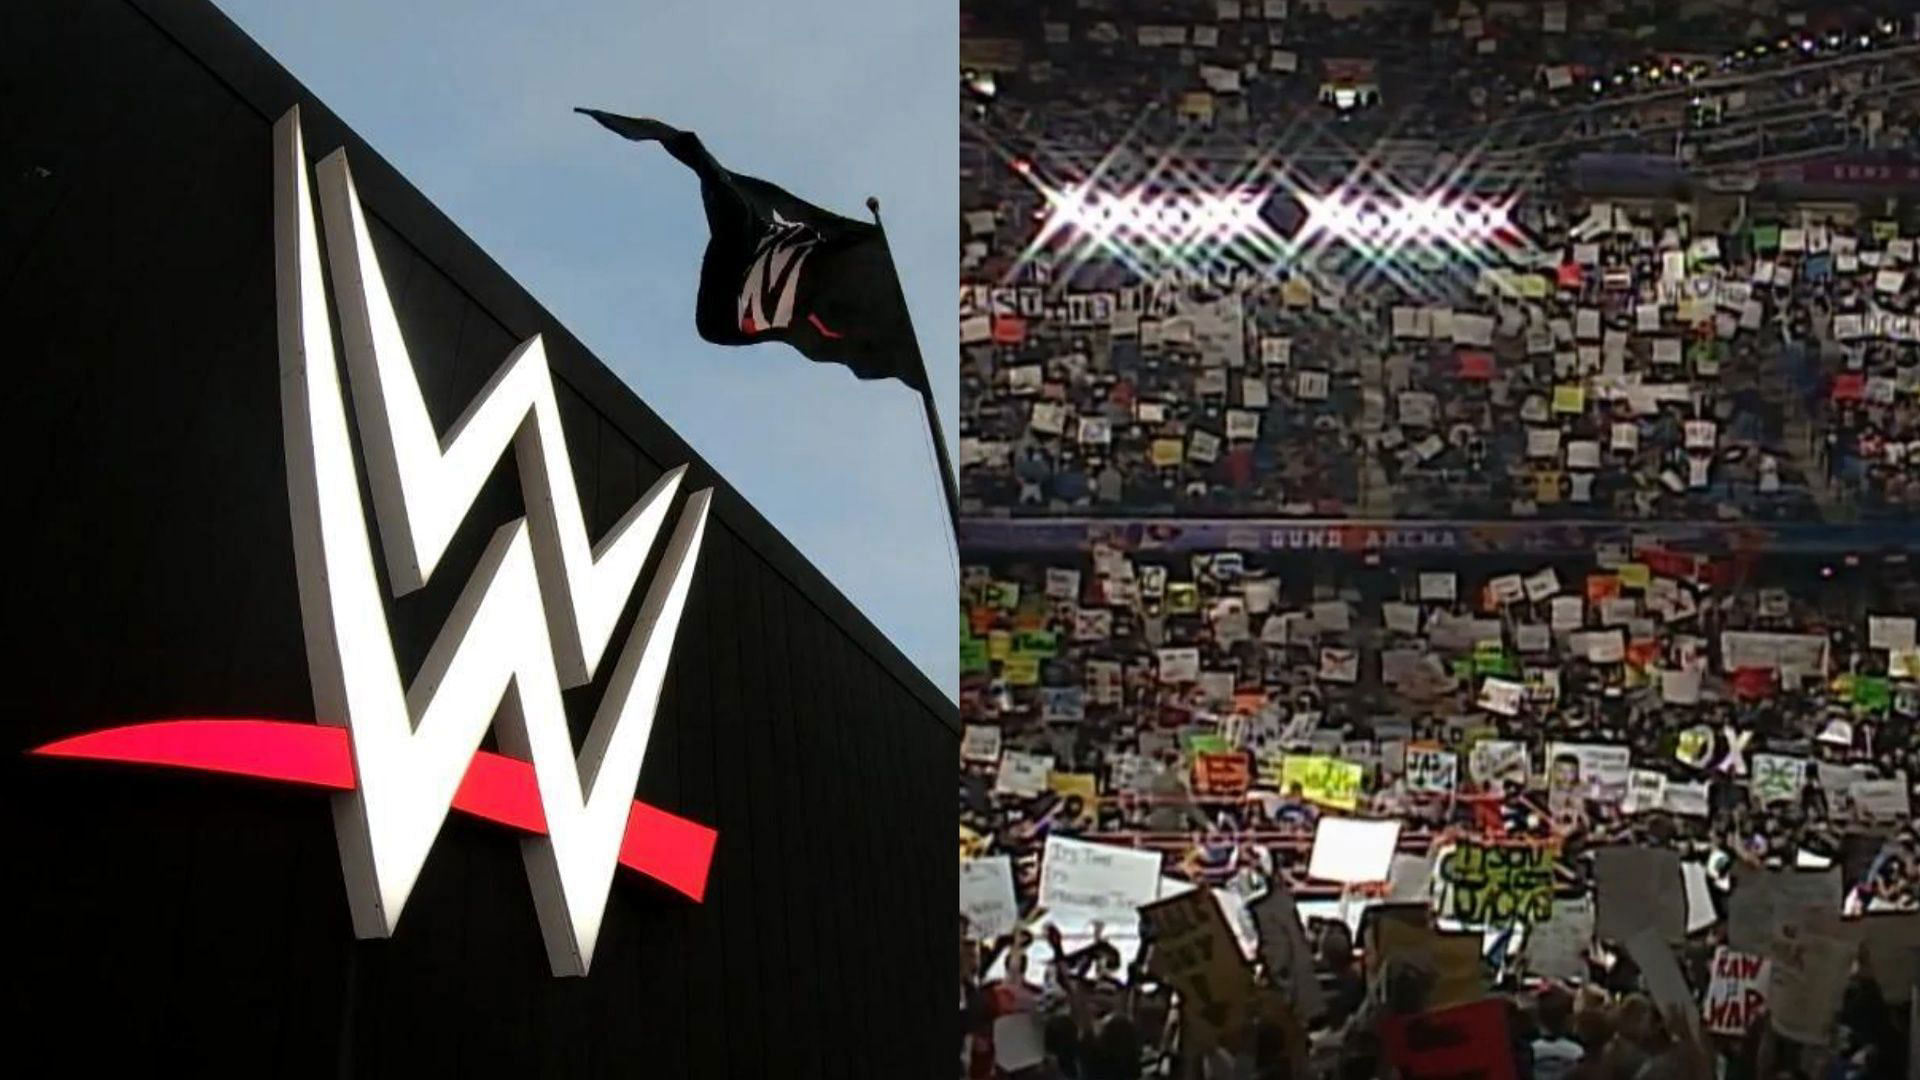 WWE merchandise sales at alltime high, surpassing Attitude Era Reports